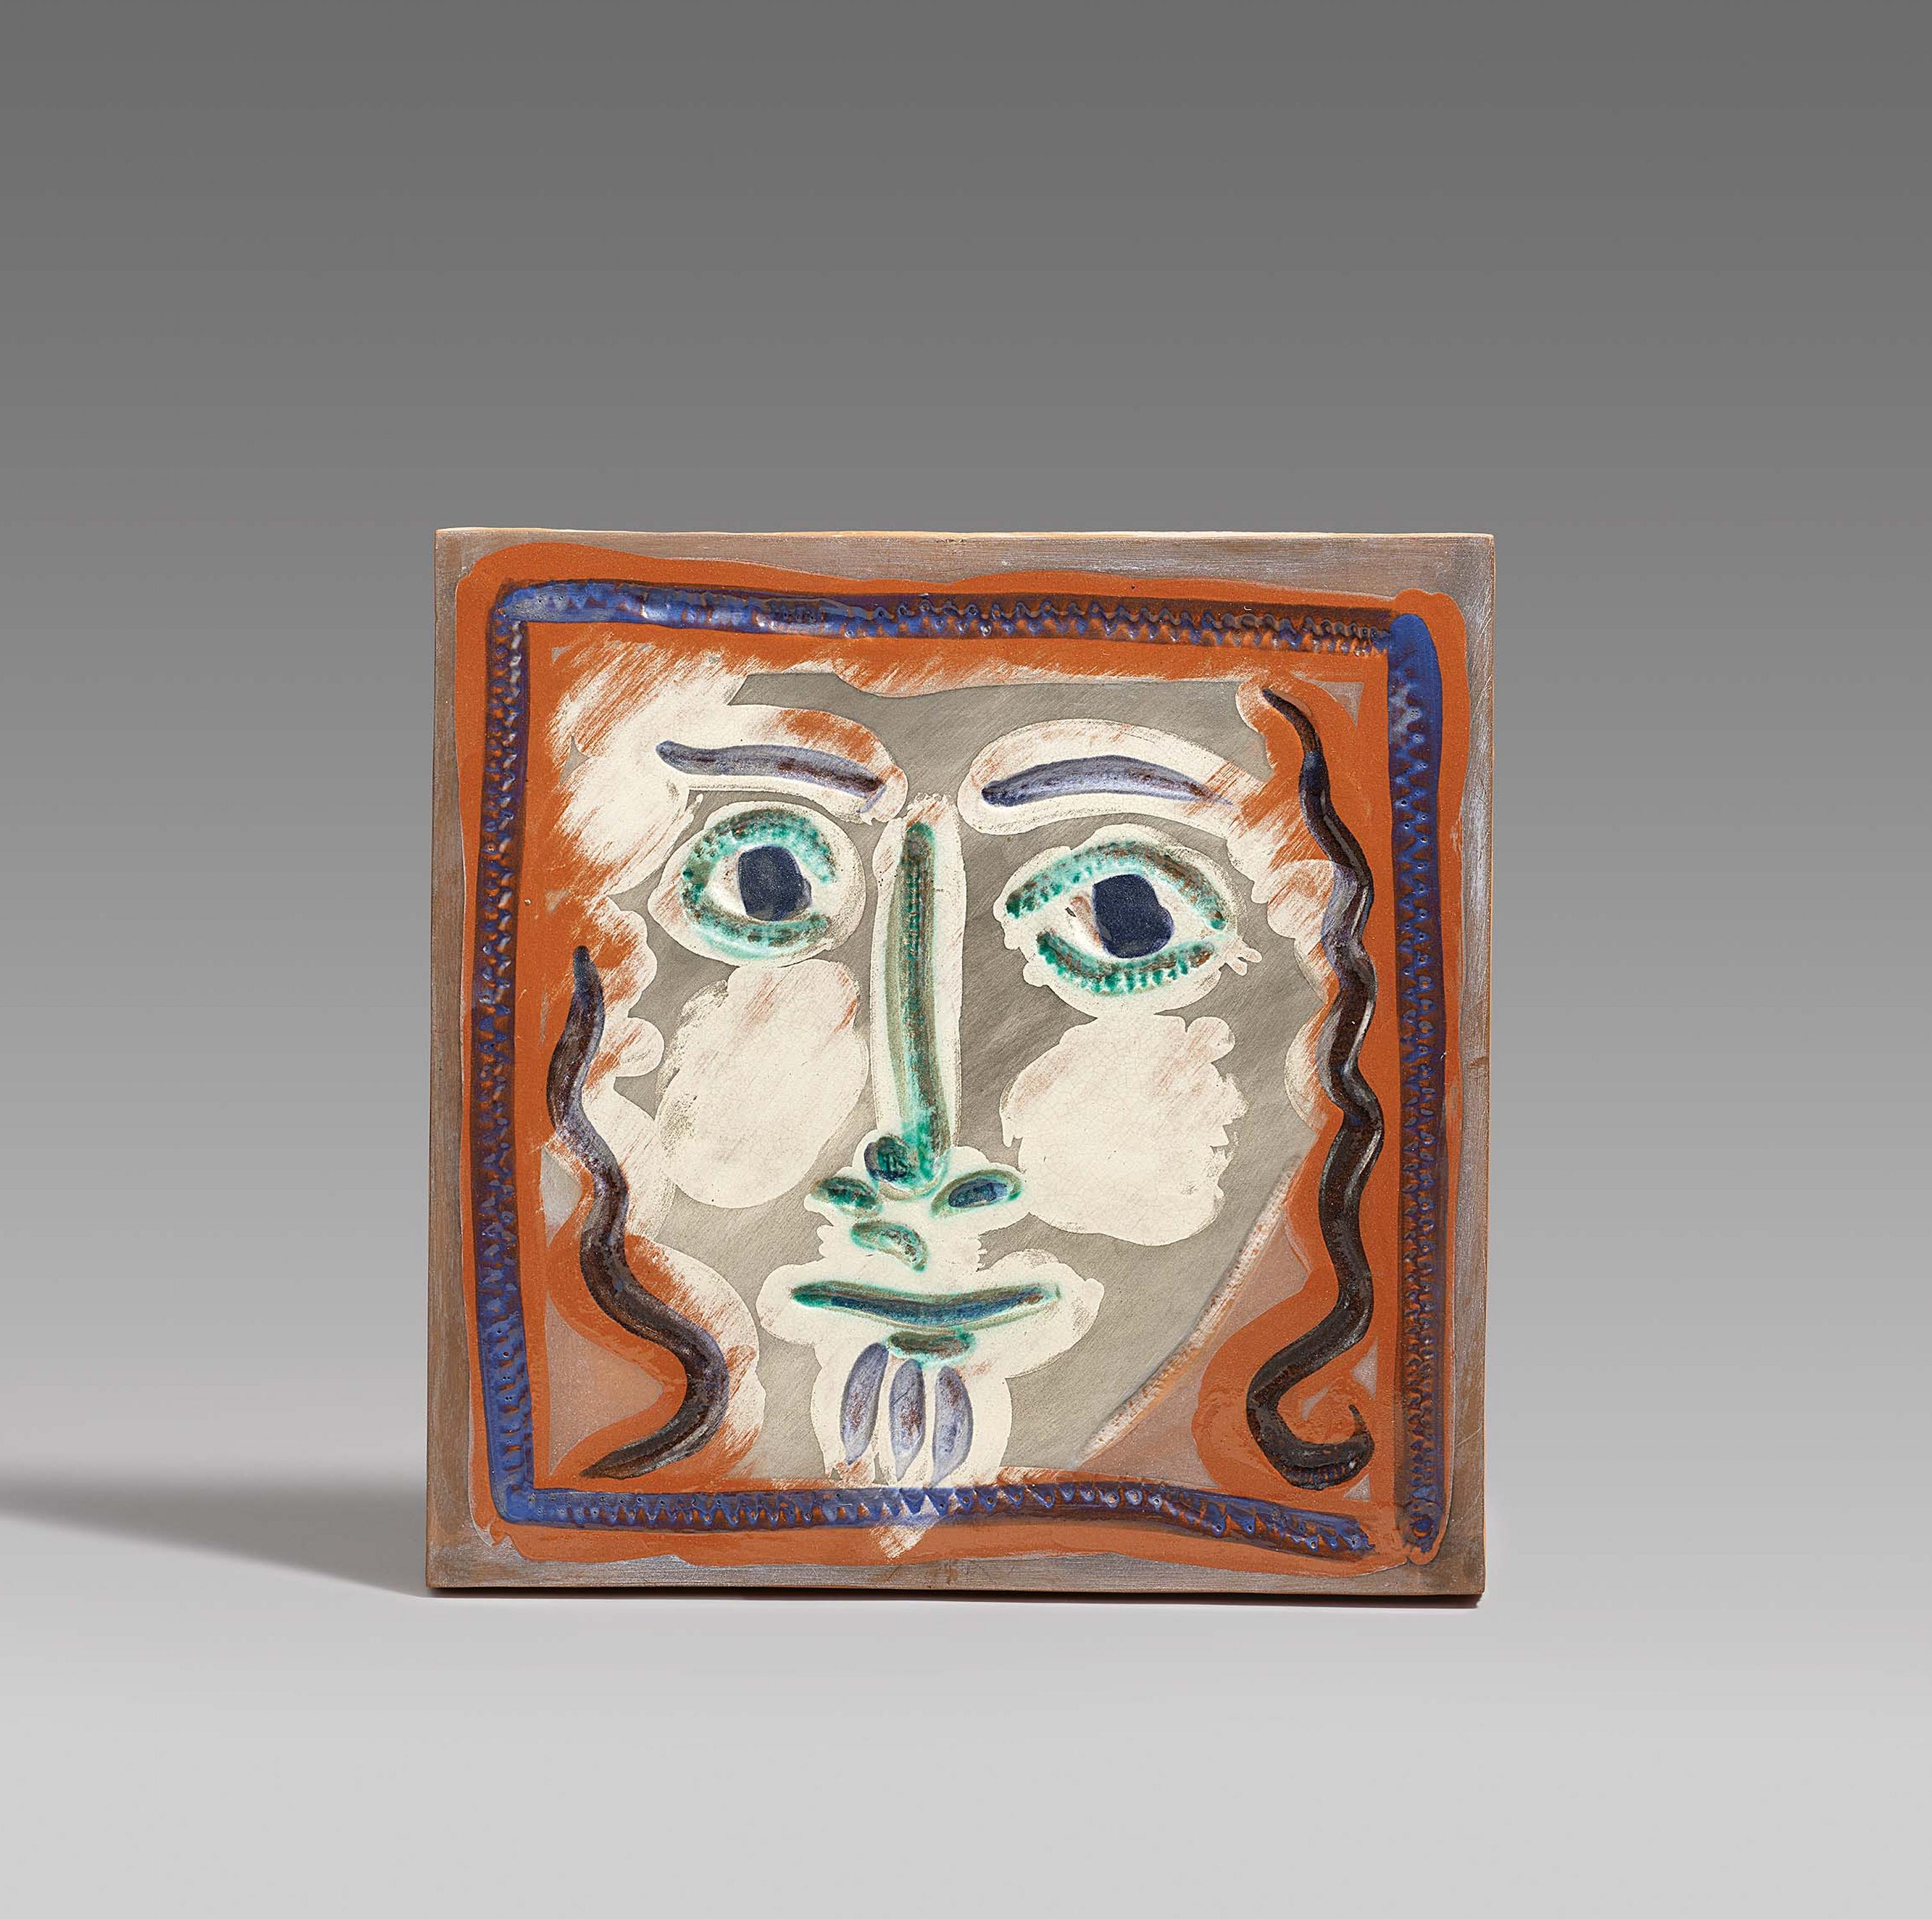 Pablo Picasso Ceramics - Curly-haired Face, 76960-11, Van Ham Kunstauktionen